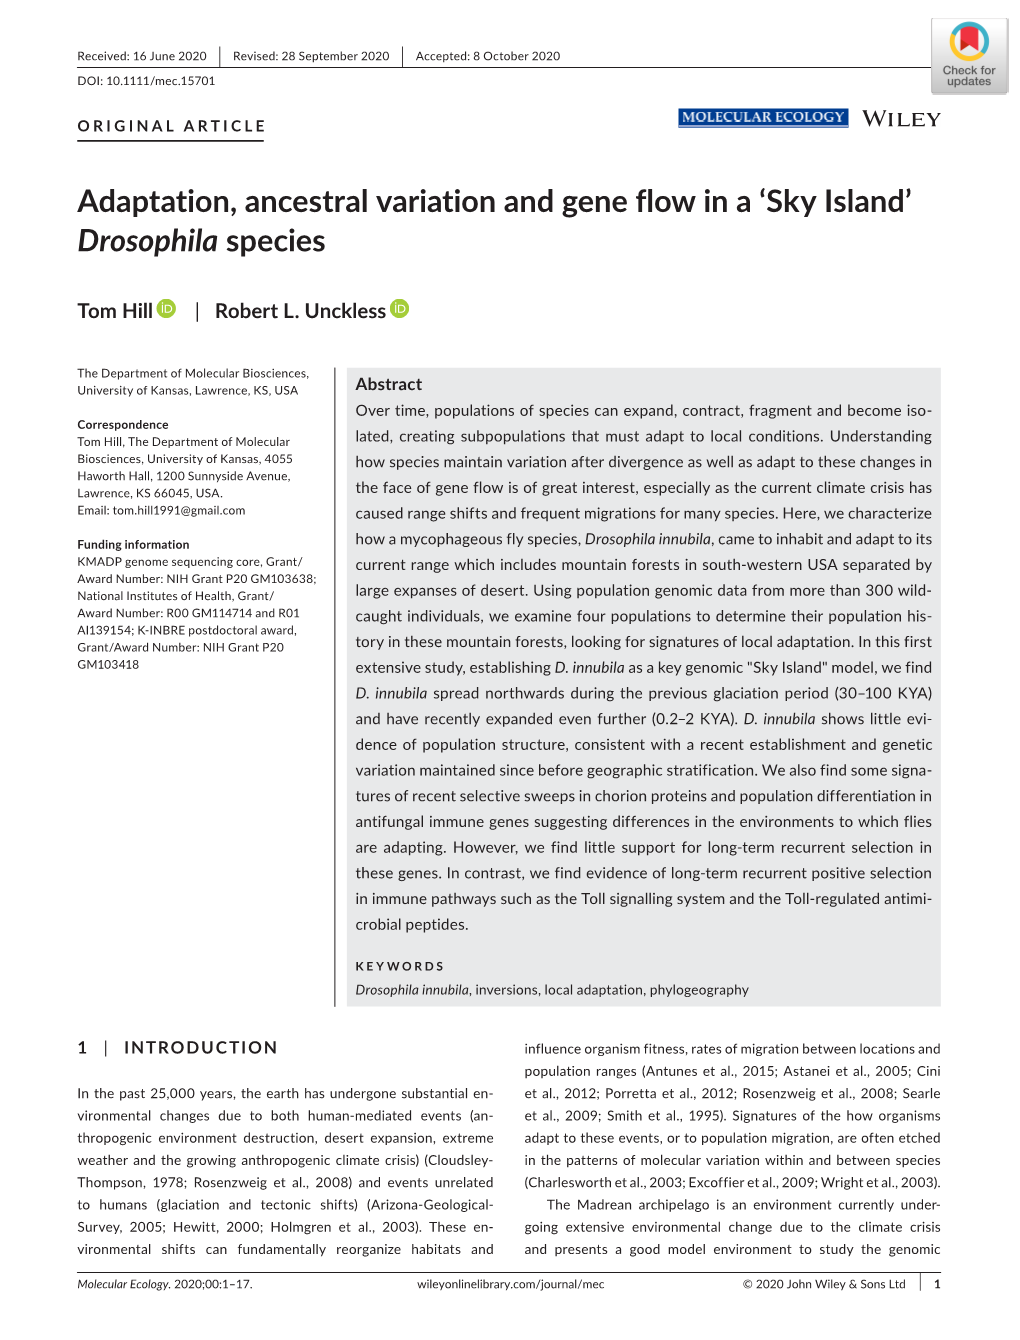 Adaptation, Ancestral Variation and Gene Flow in a ‘Sky Island’ Drosophila Species